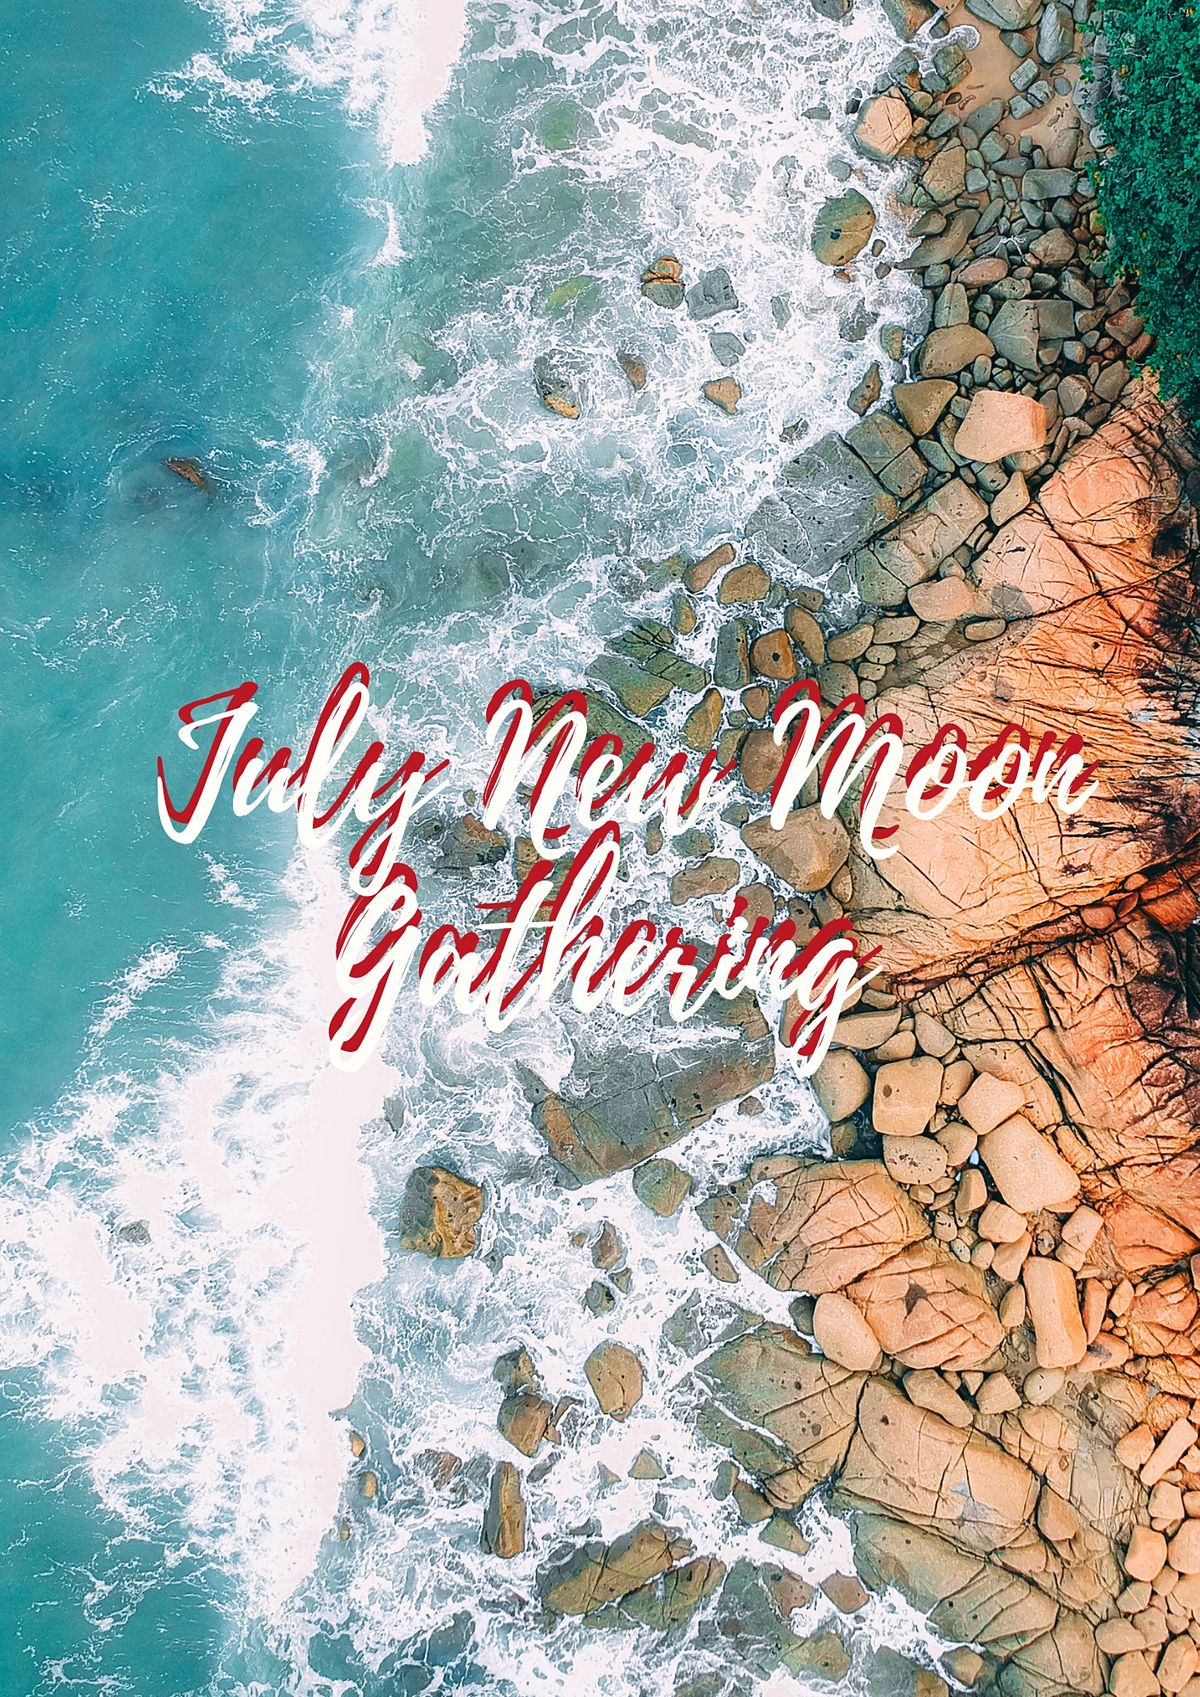 July New Moon Gathering